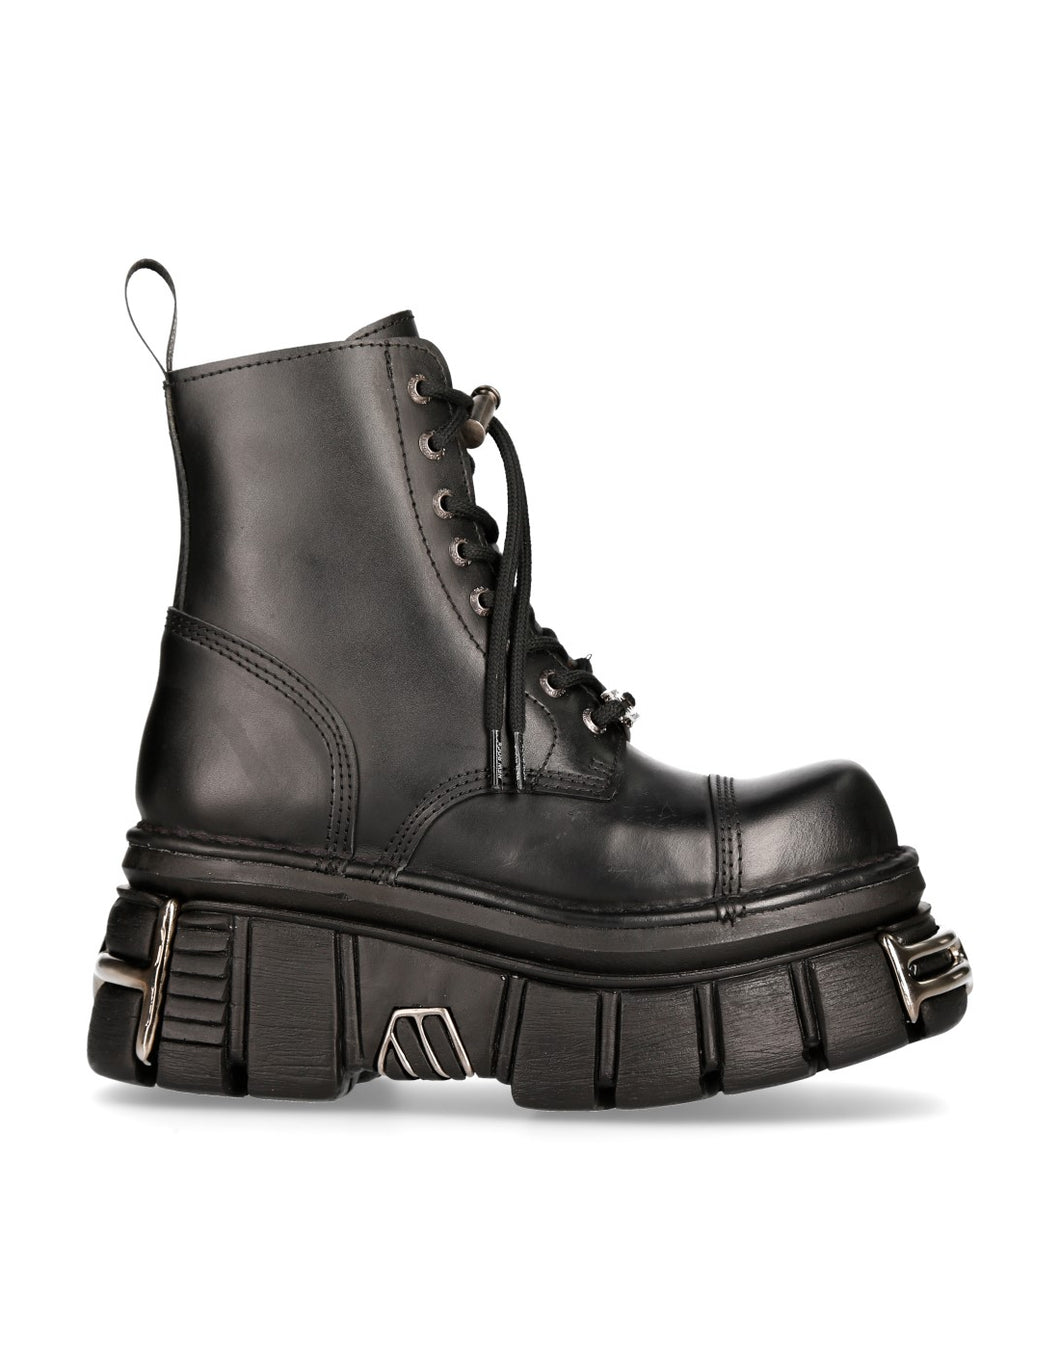 New Rock Schuhe Shoes Boots Stiefel M-NEWMILI083-S37 Echtleder